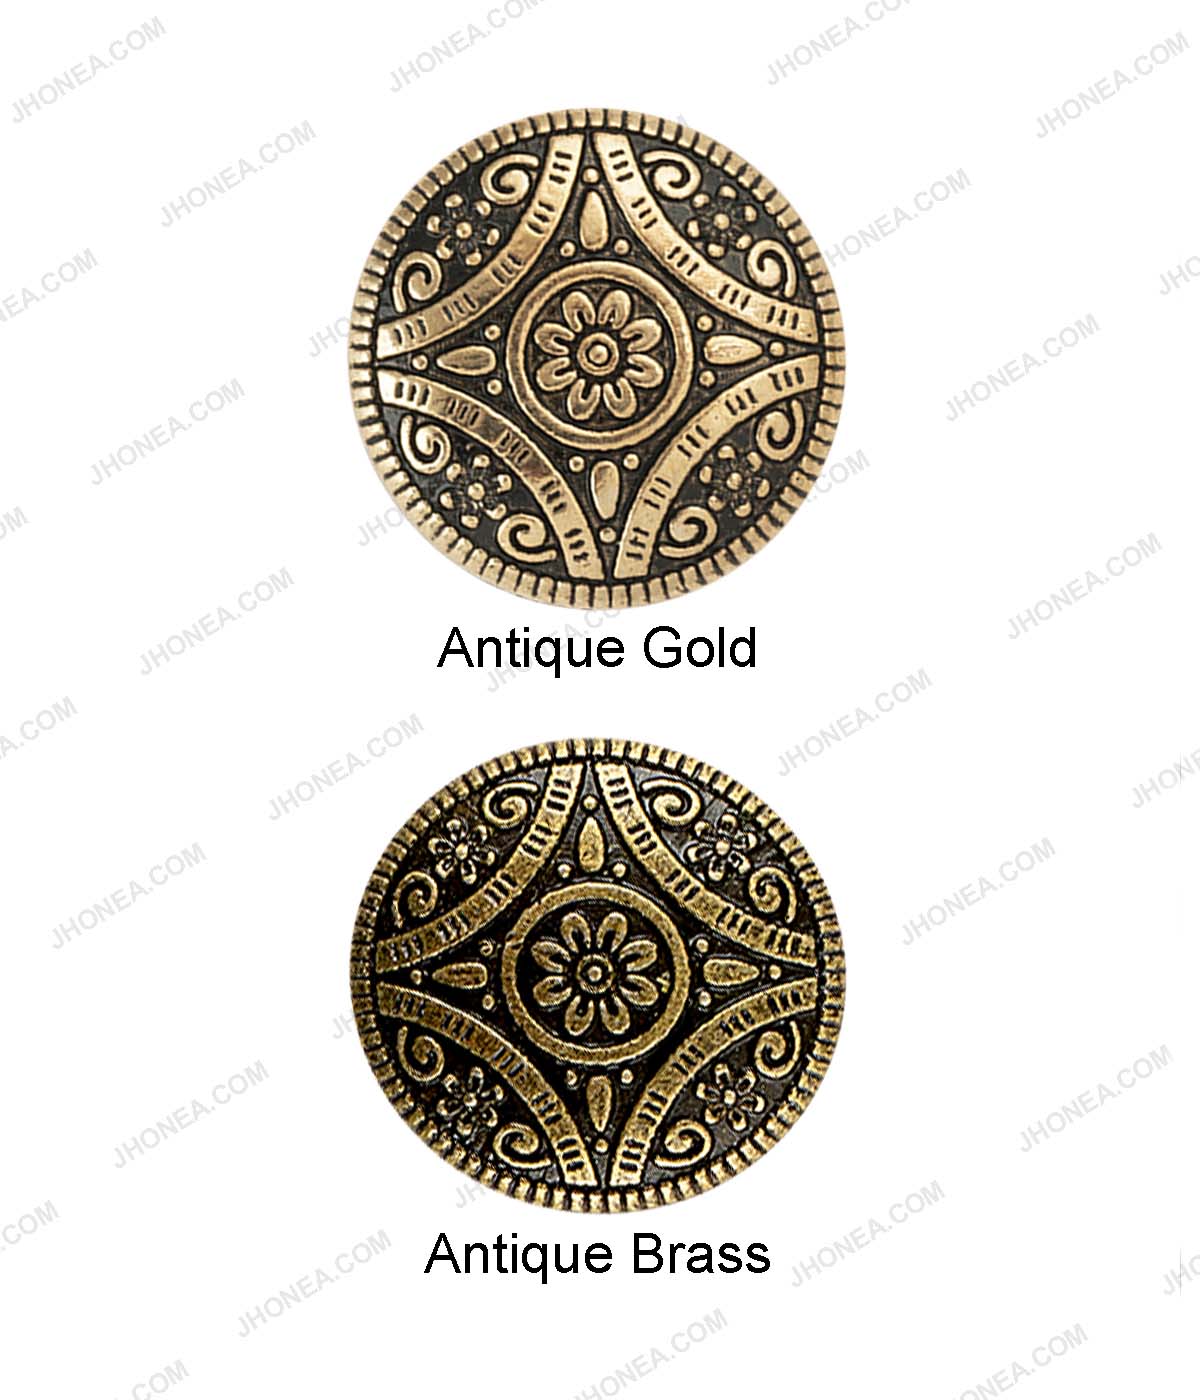 Antique Brass & Antique Gold Intricate Design Shank Buttons